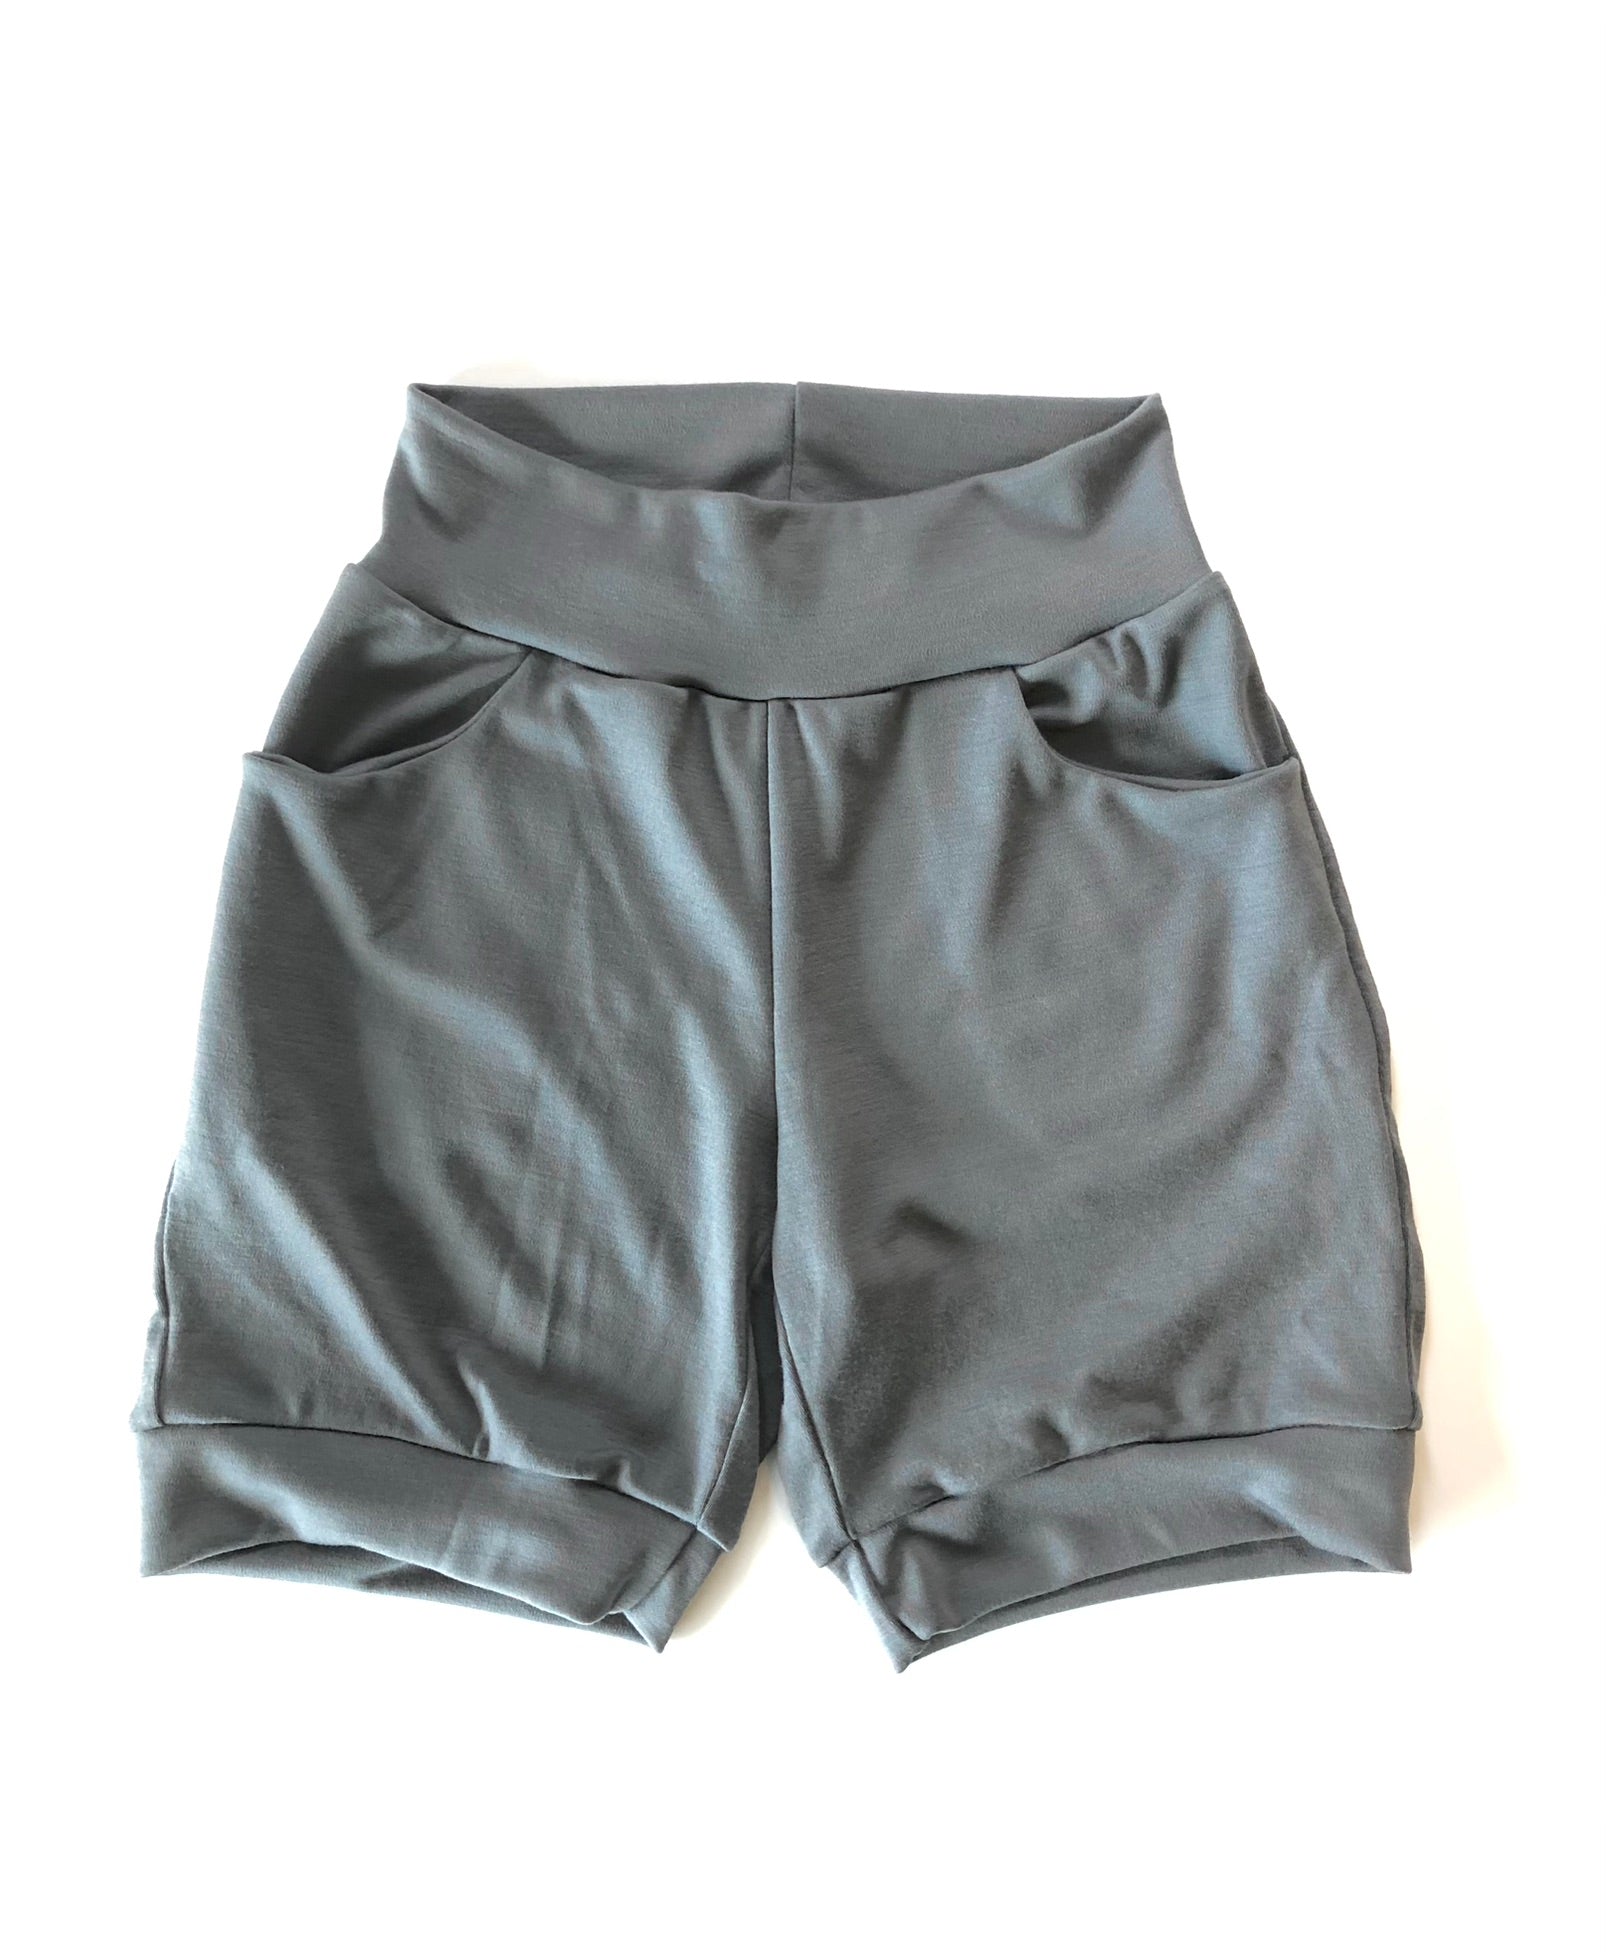 Women's Medium Wool Shorts - Ready to ship!